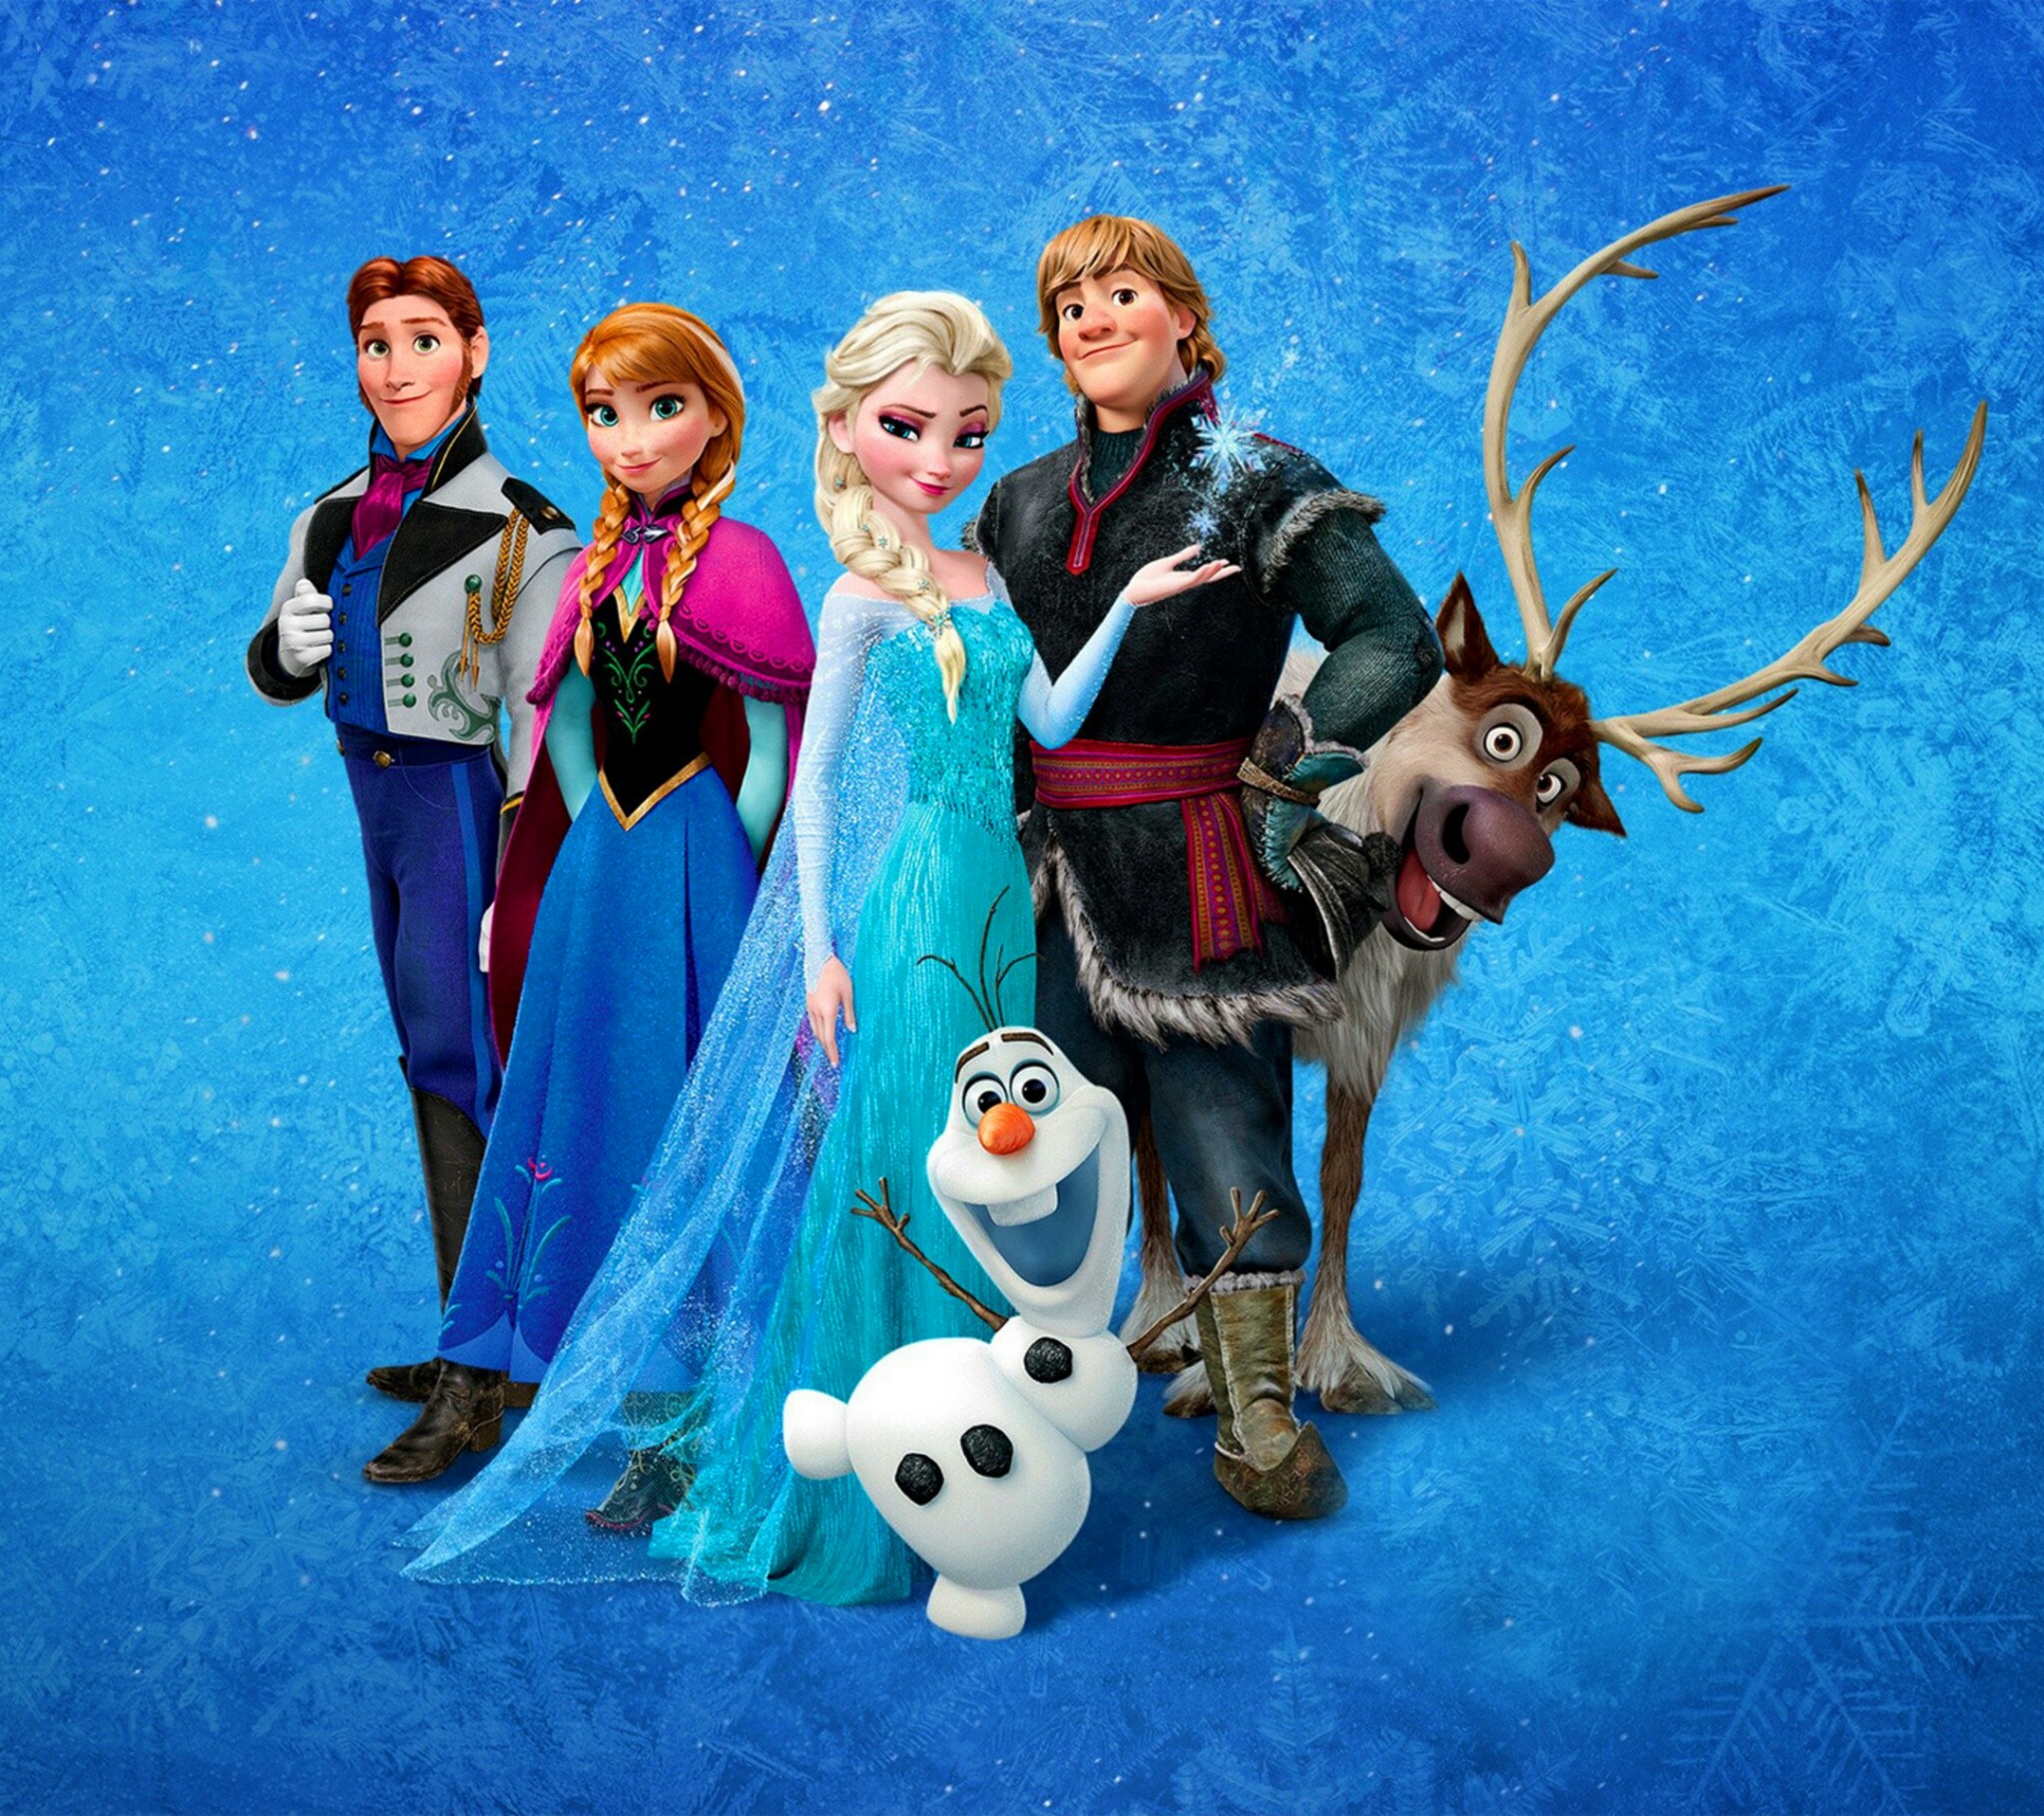 Frozen - Disney movie - Elsa, Anna, Kristoff, Hans, Sven, and Olaf